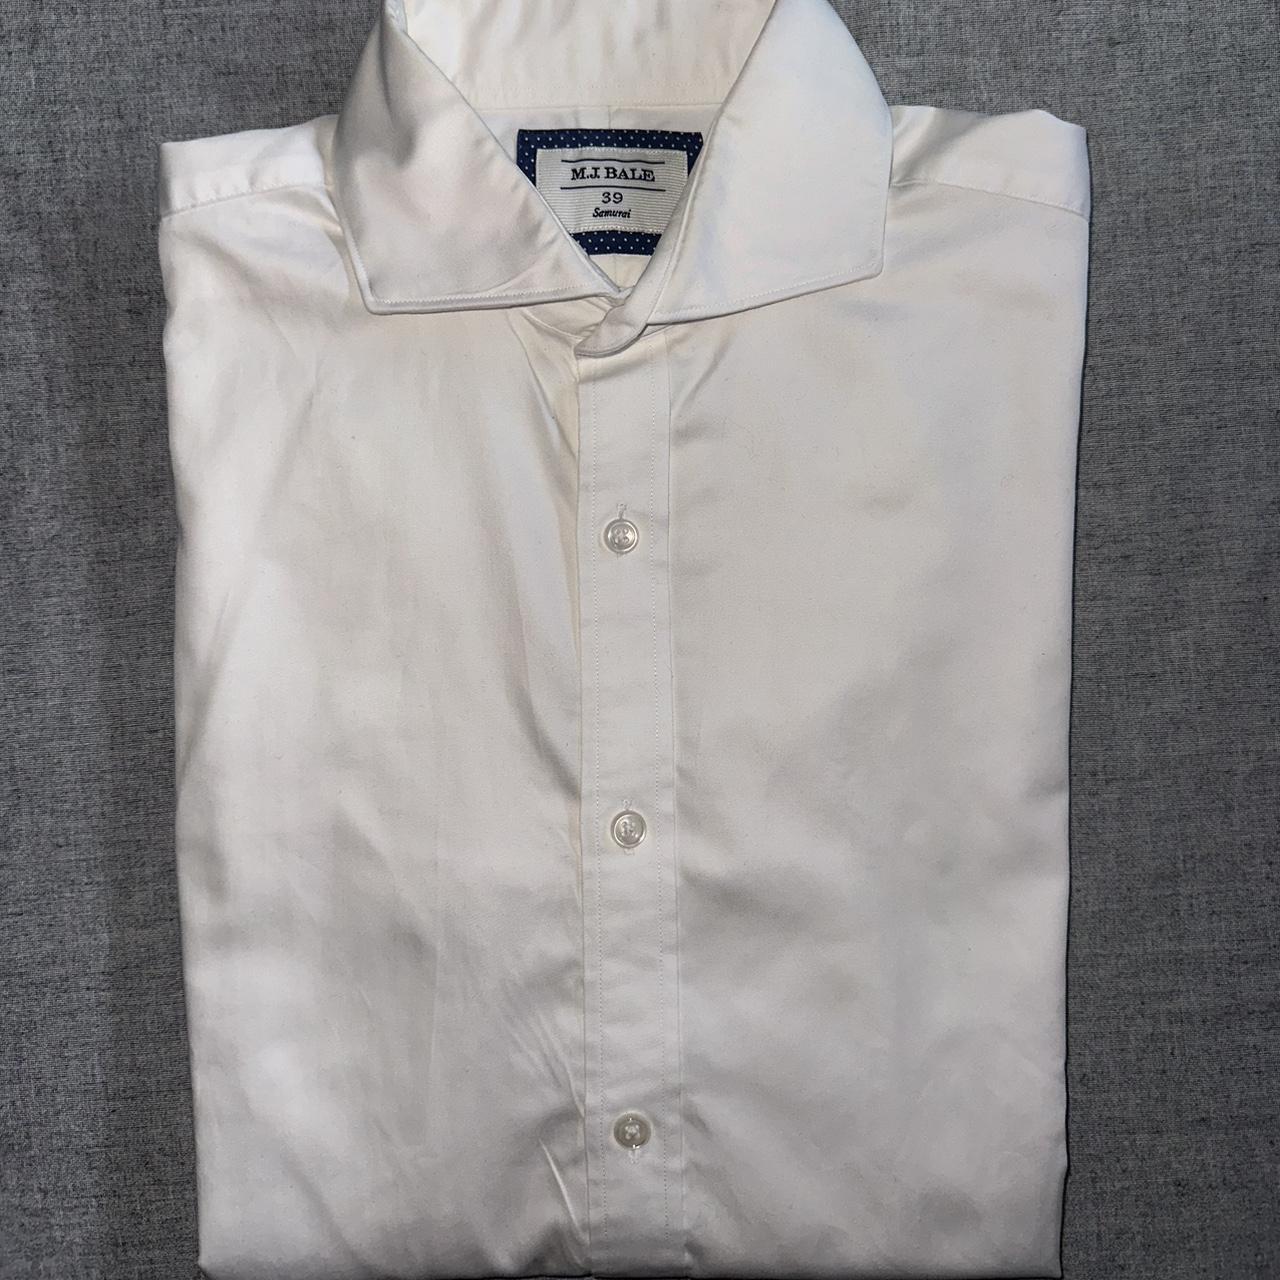 MJ Bale White Dress Shirt - Depop